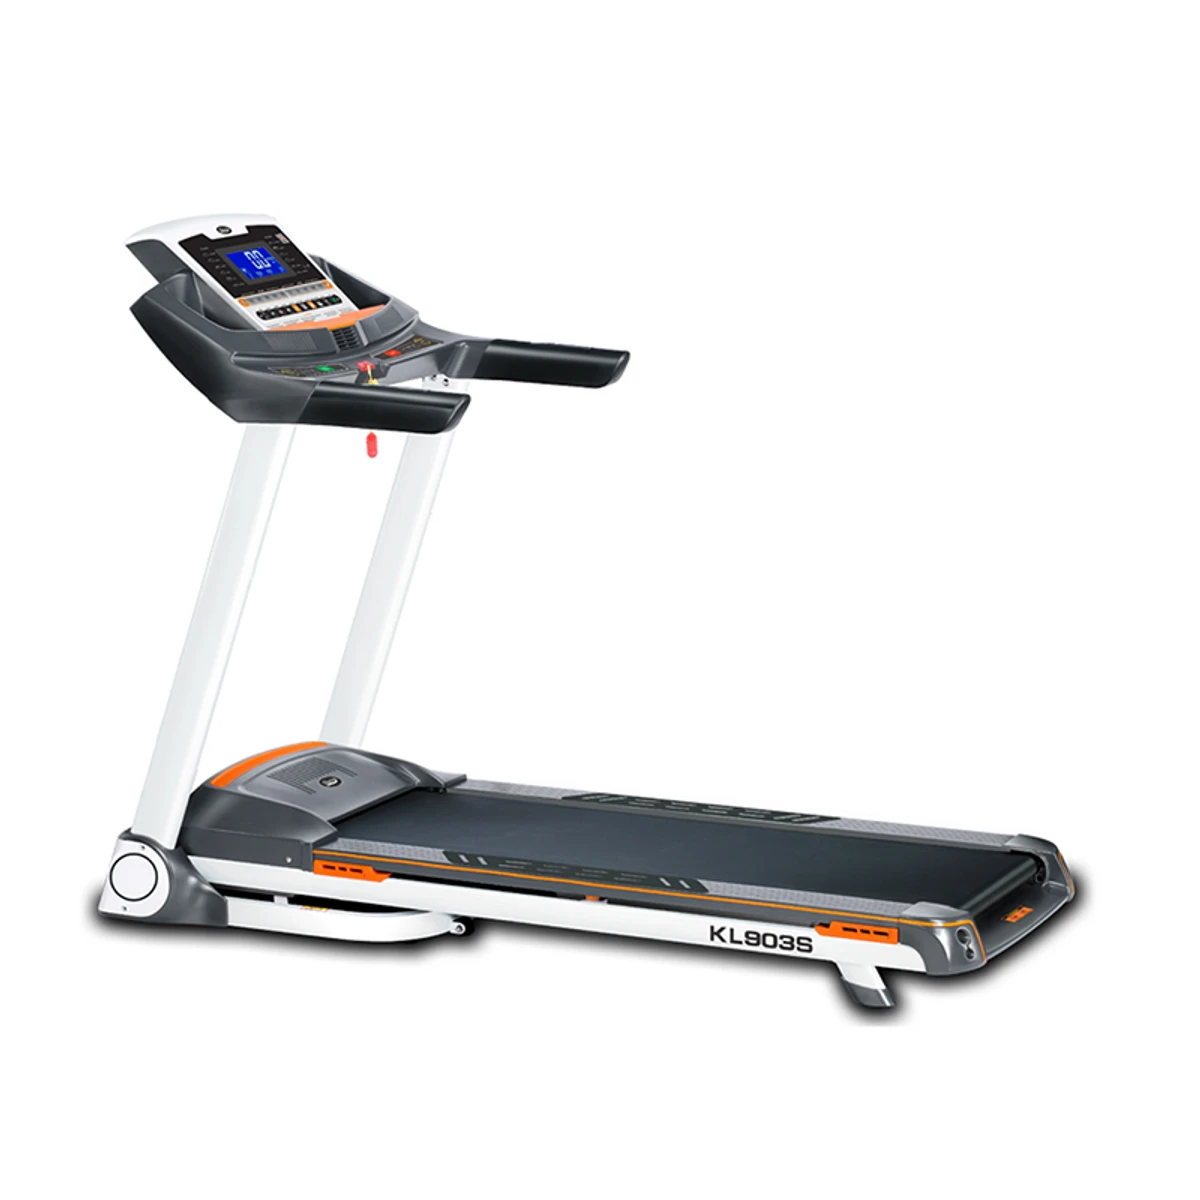 Daily youth KL-903S Foldable Motorized Treadmill